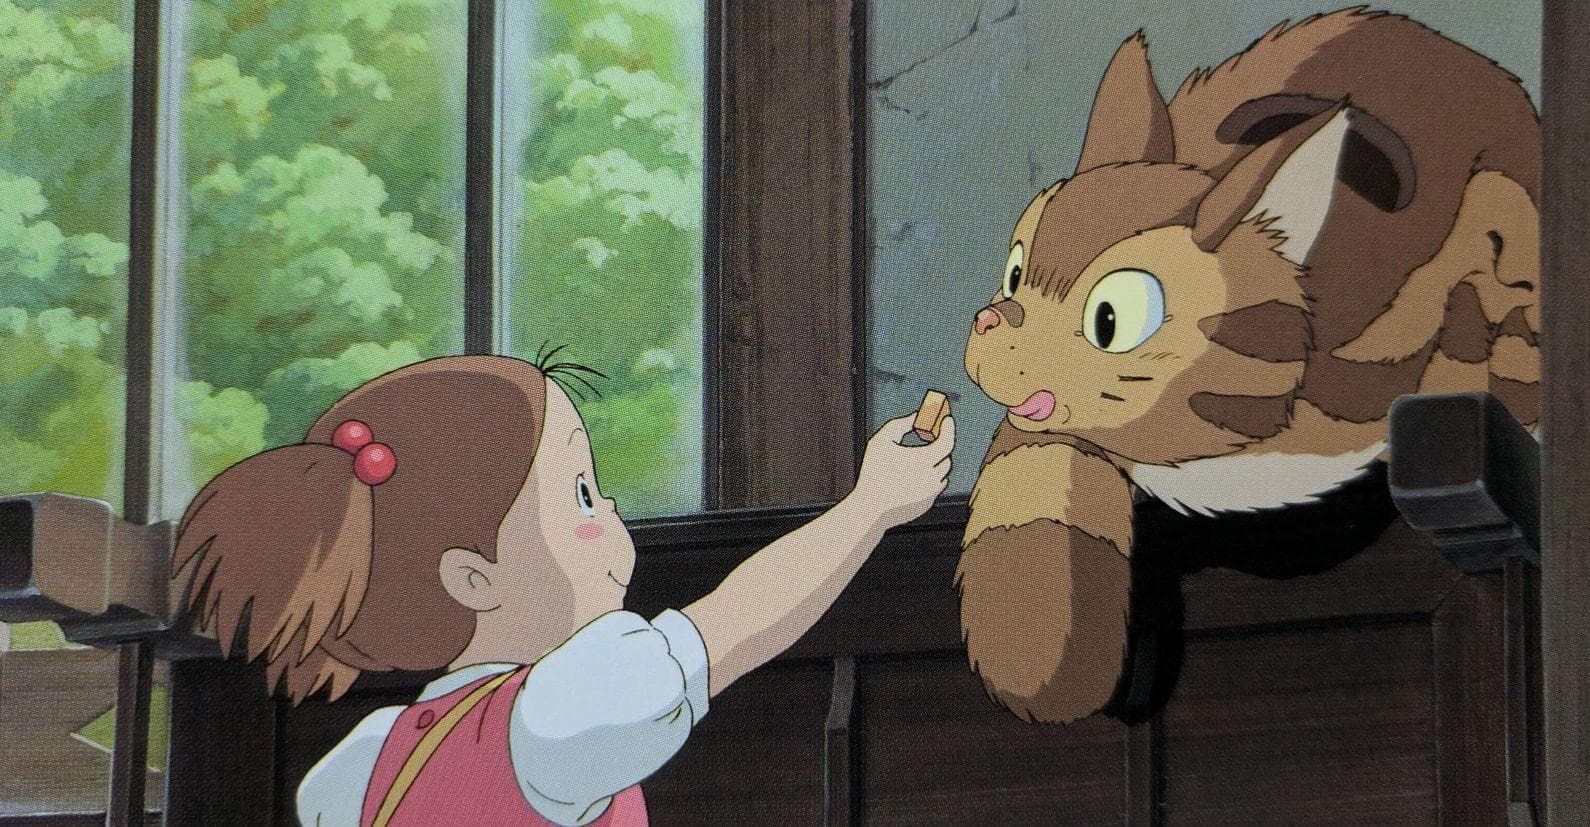 The Best Studio Ghibli Movies, Ranked Best to Worst